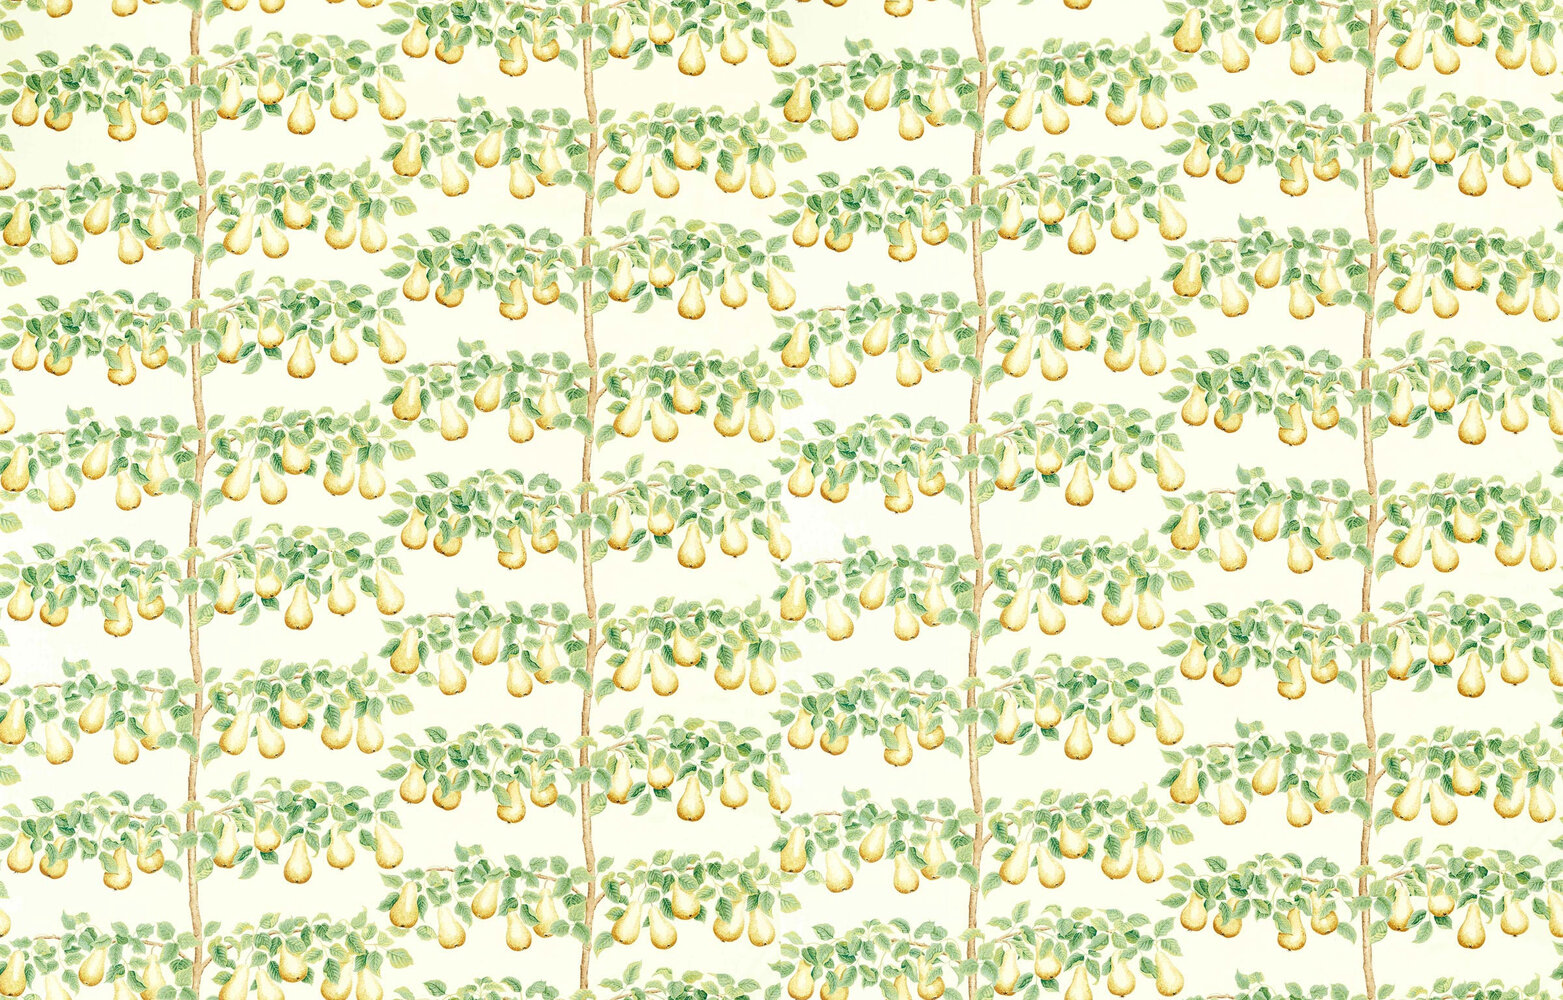 Perry Pears Fabric - Ochre / Leaf Green - by Sanderson